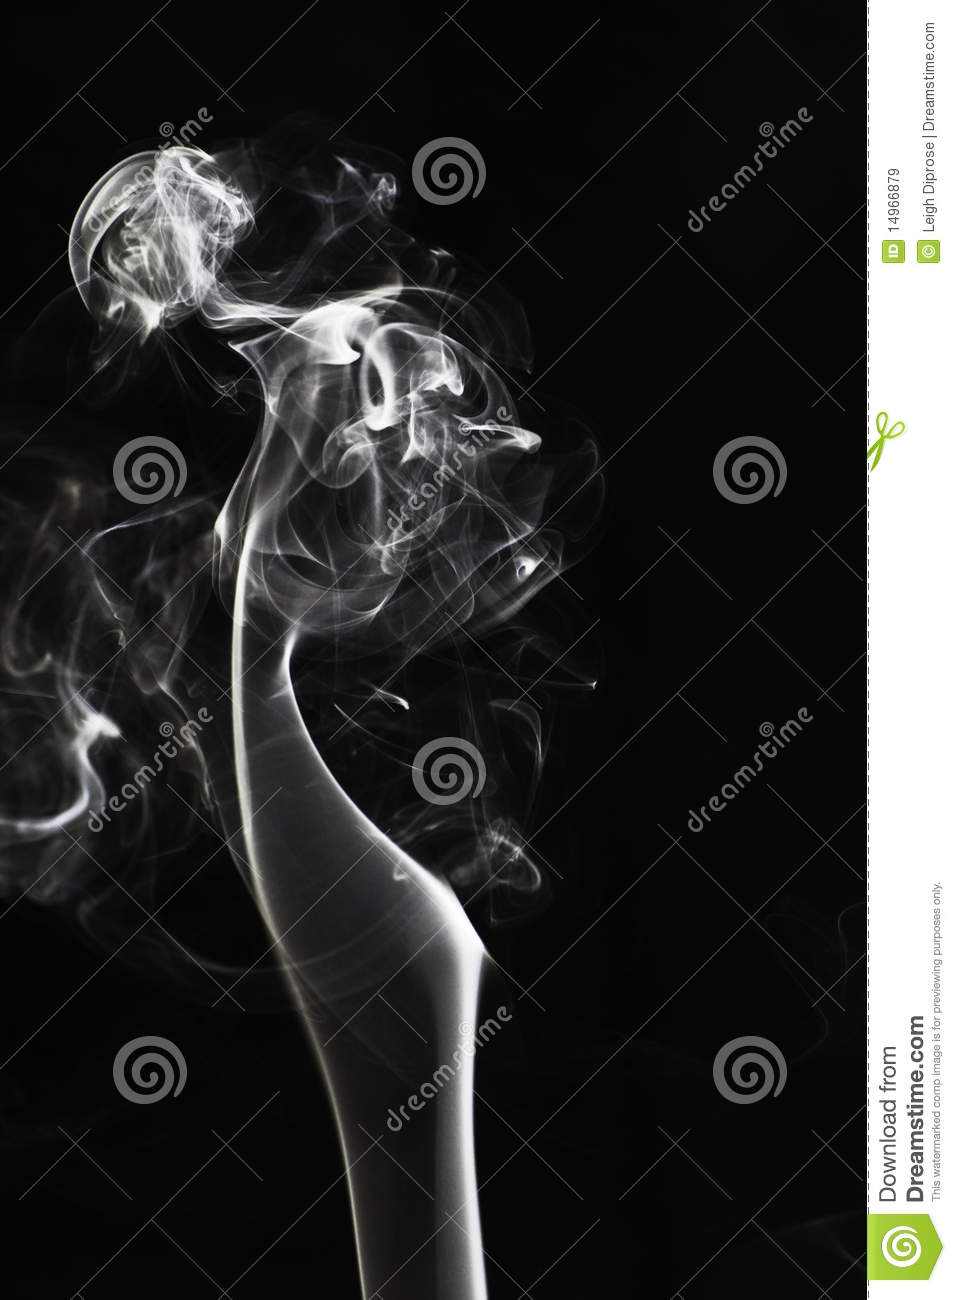 Wisp Of Smoke Royalty Free Stock Images   Image  14966879